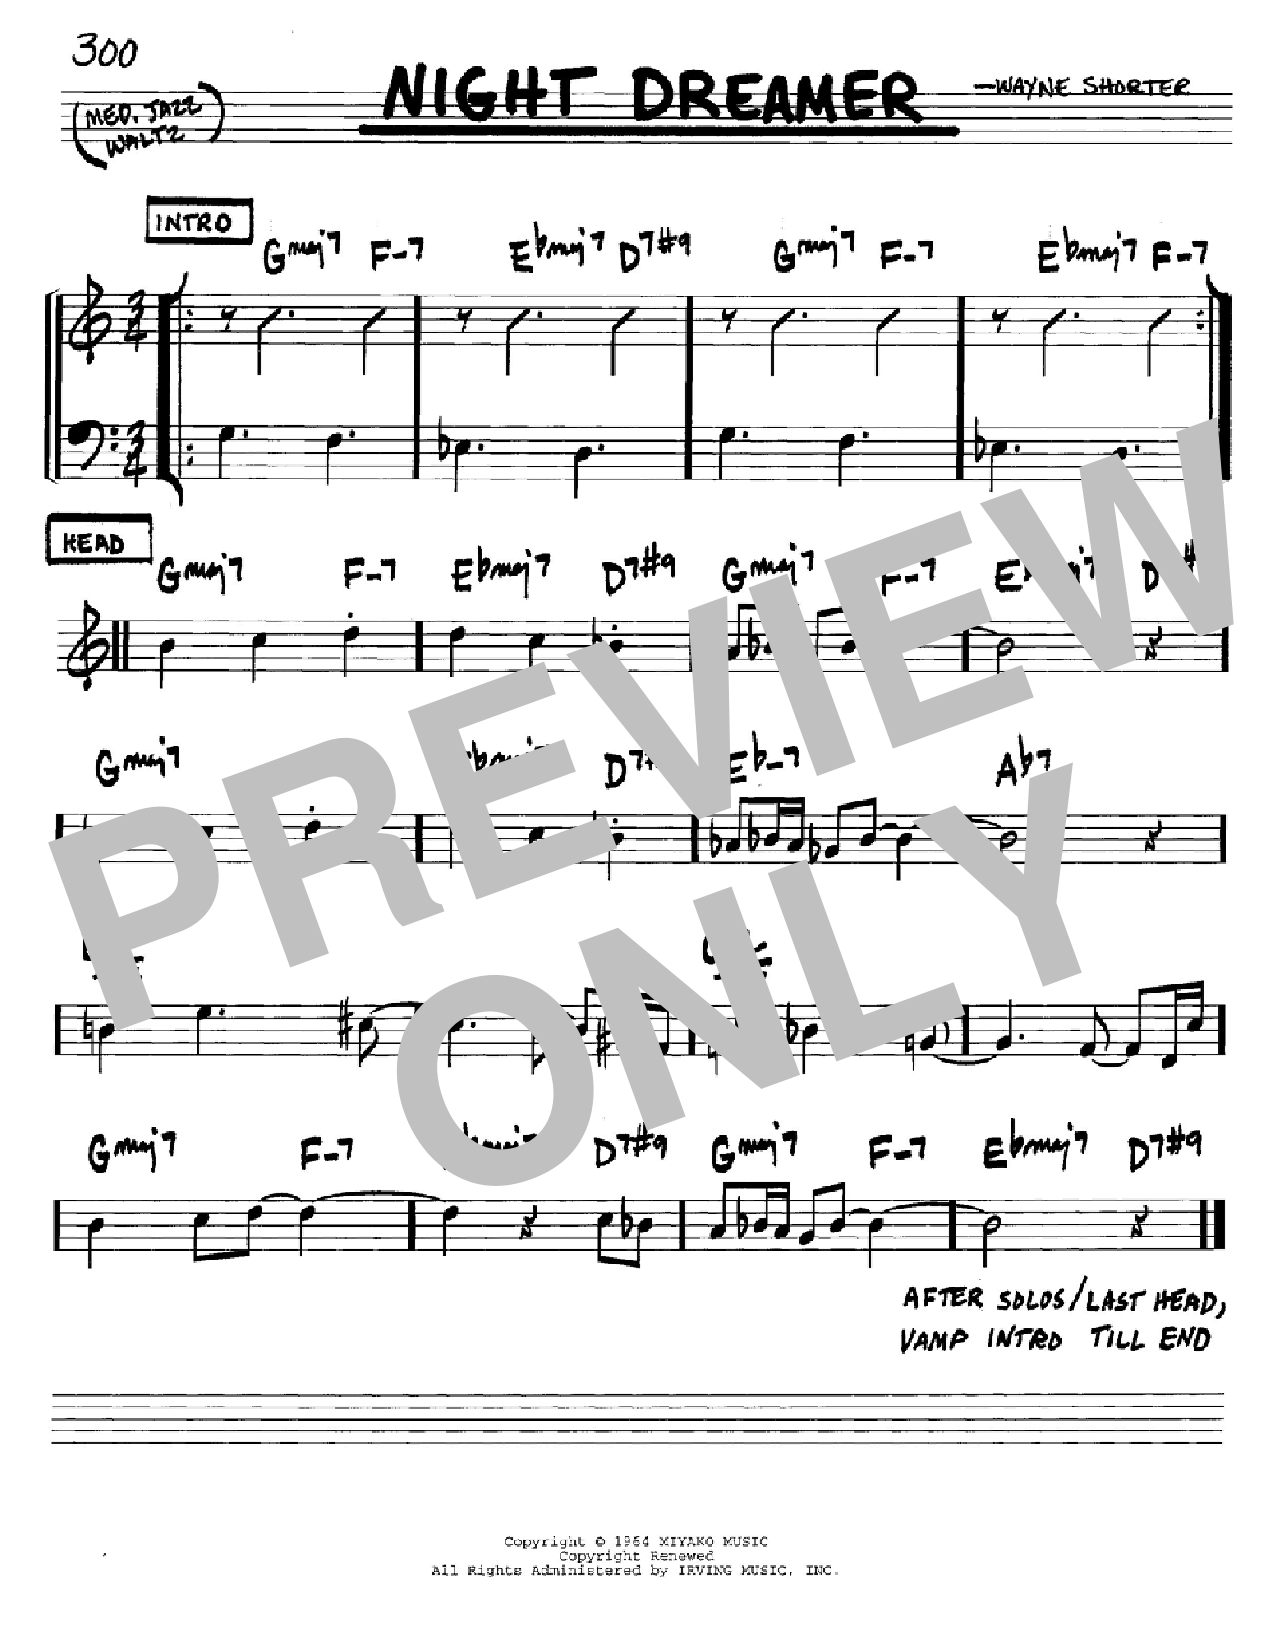 Wayne Shorter Night Dreamer Sheet Music Notes & Chords for Real Book - Melody & Chords - Bb Instruments - Download or Print PDF